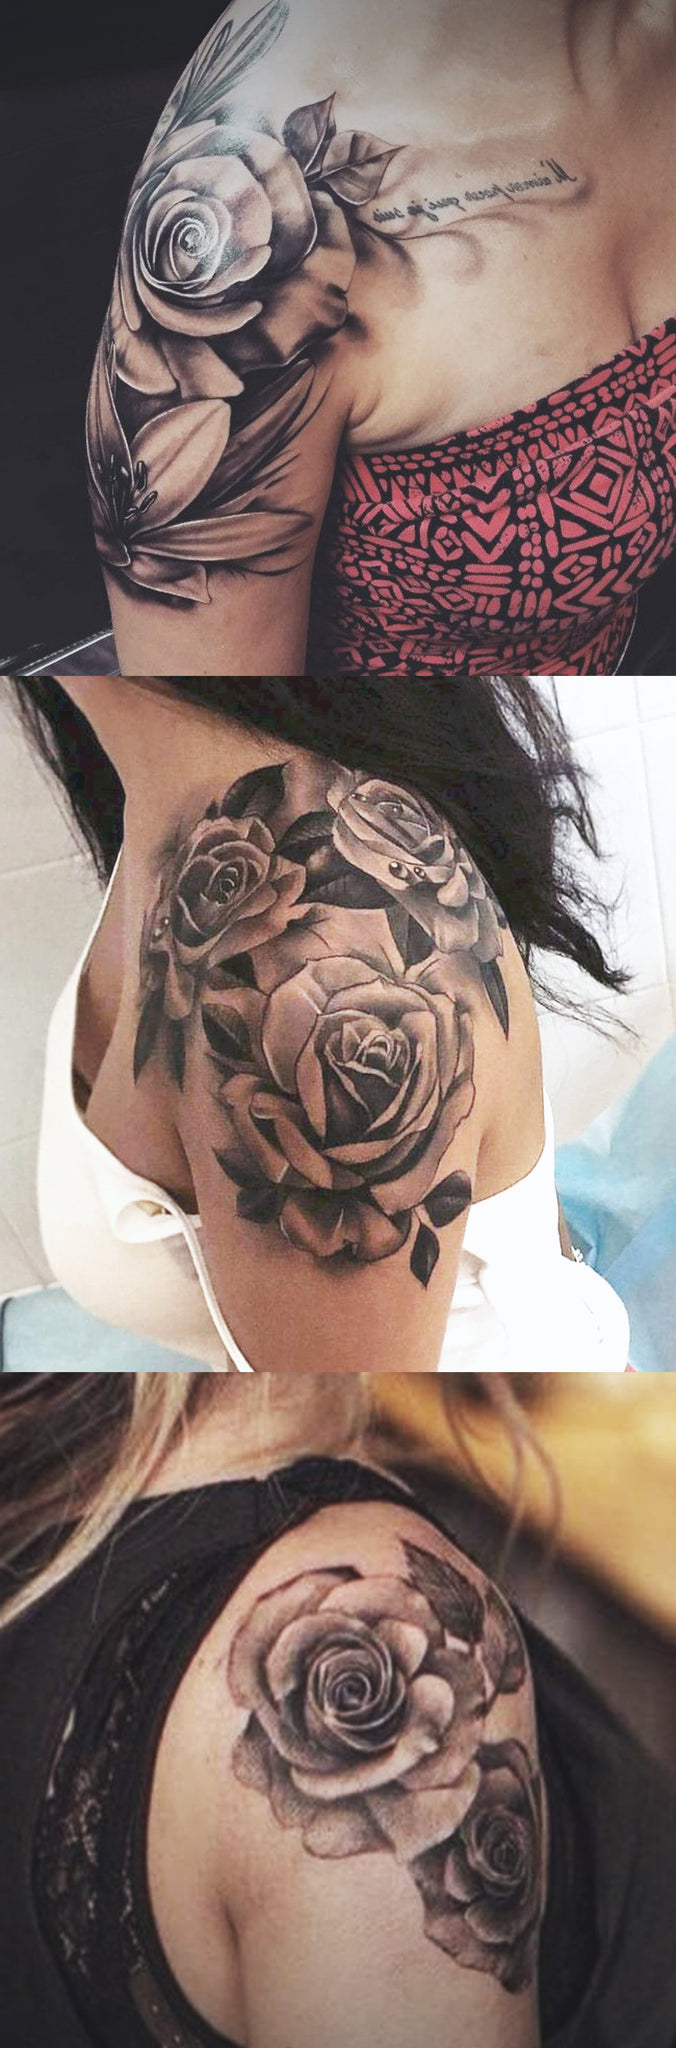 tattoos for women roses on shoulder